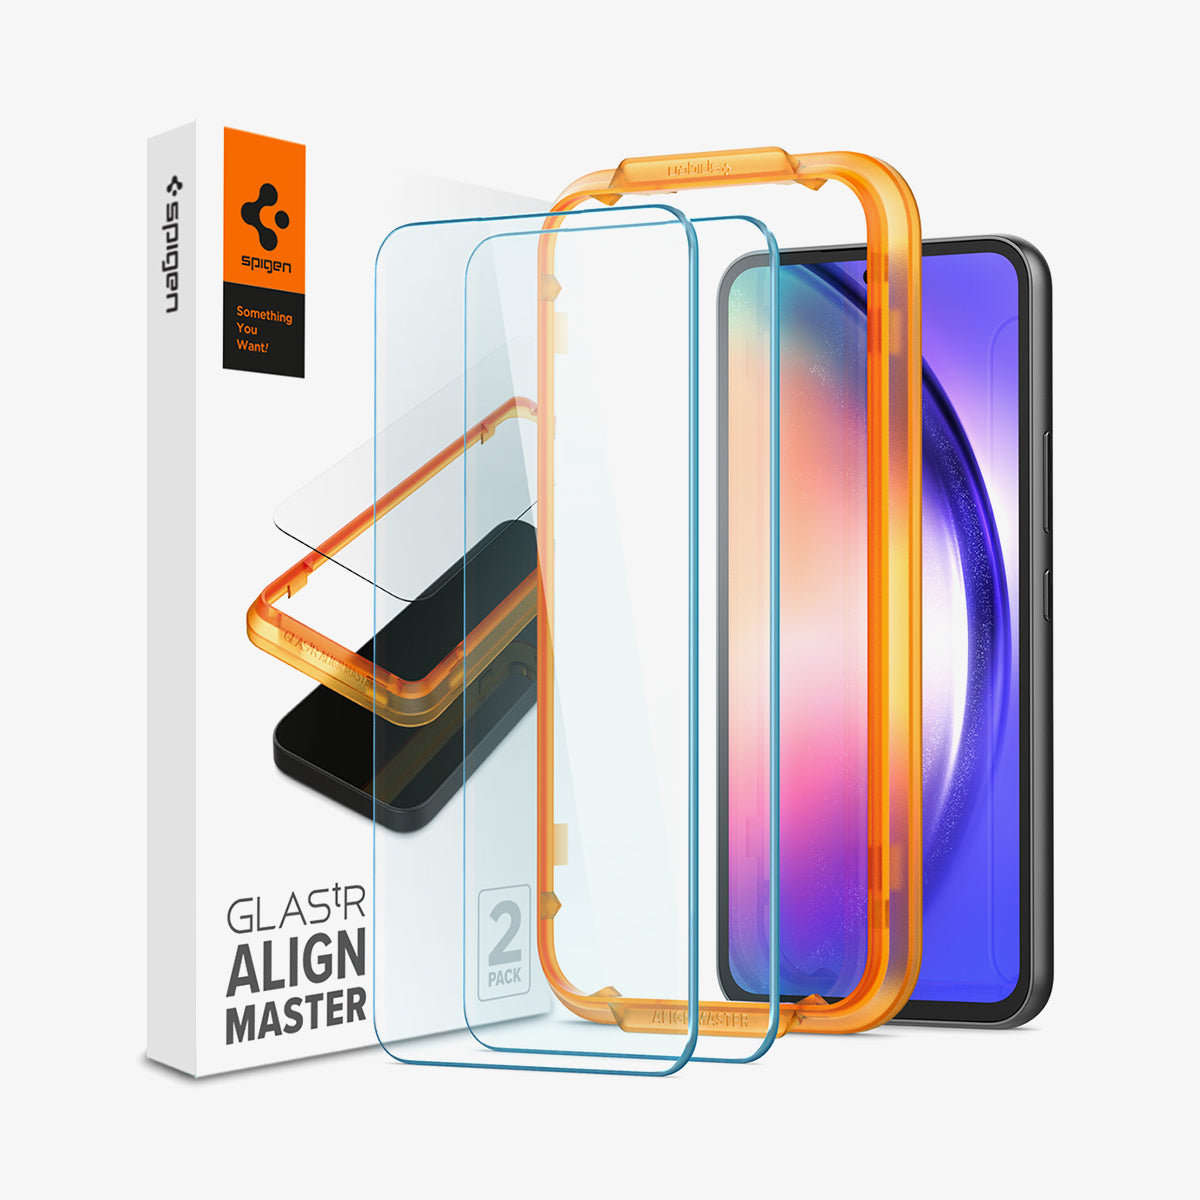 iPhone SE Series Alignmaster Full Cover Screen Protector - Spigen